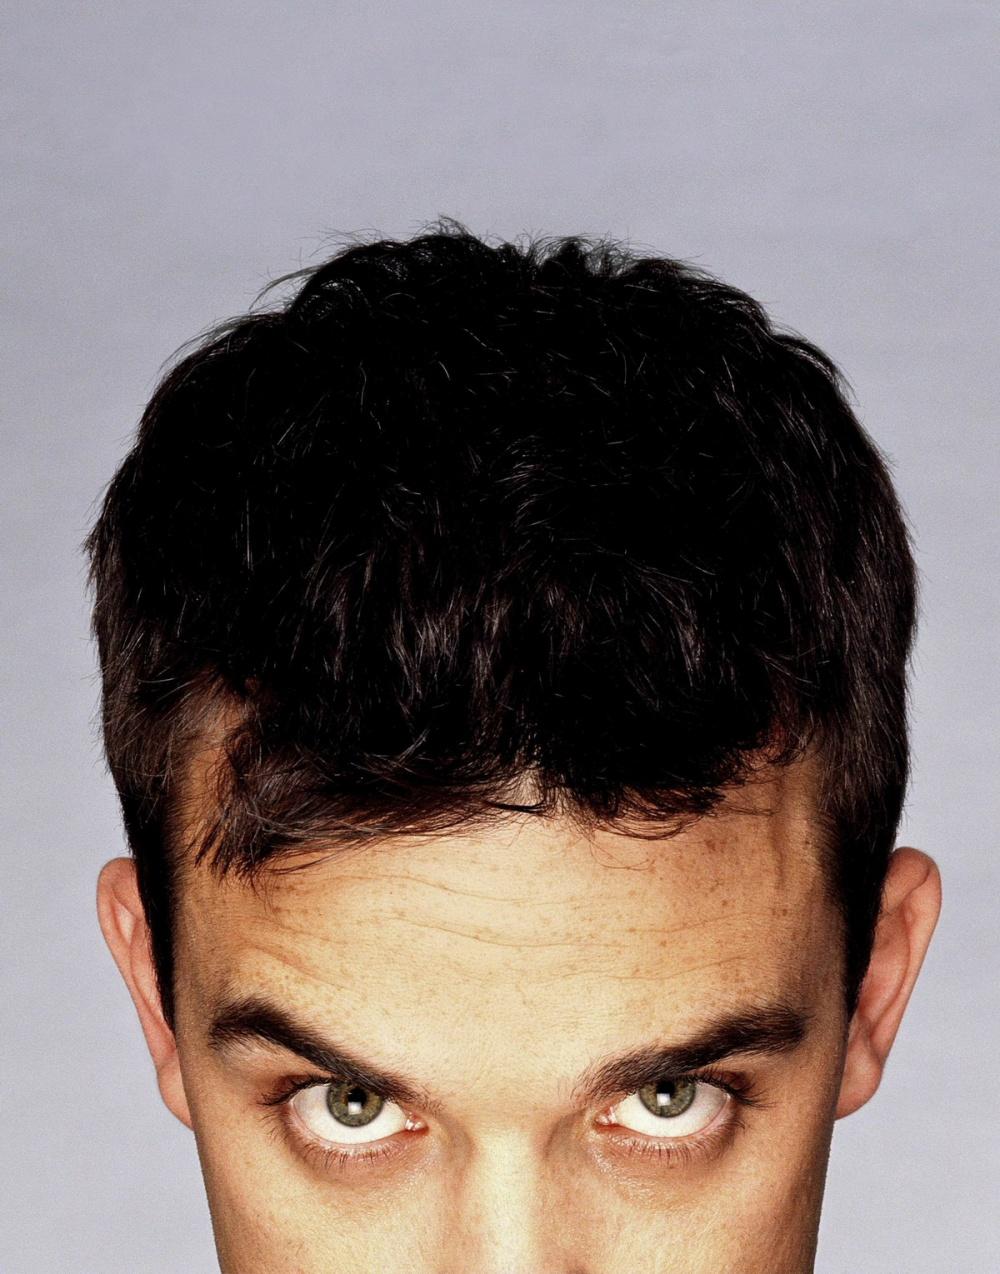 Photo №9845 Robbie Williams.